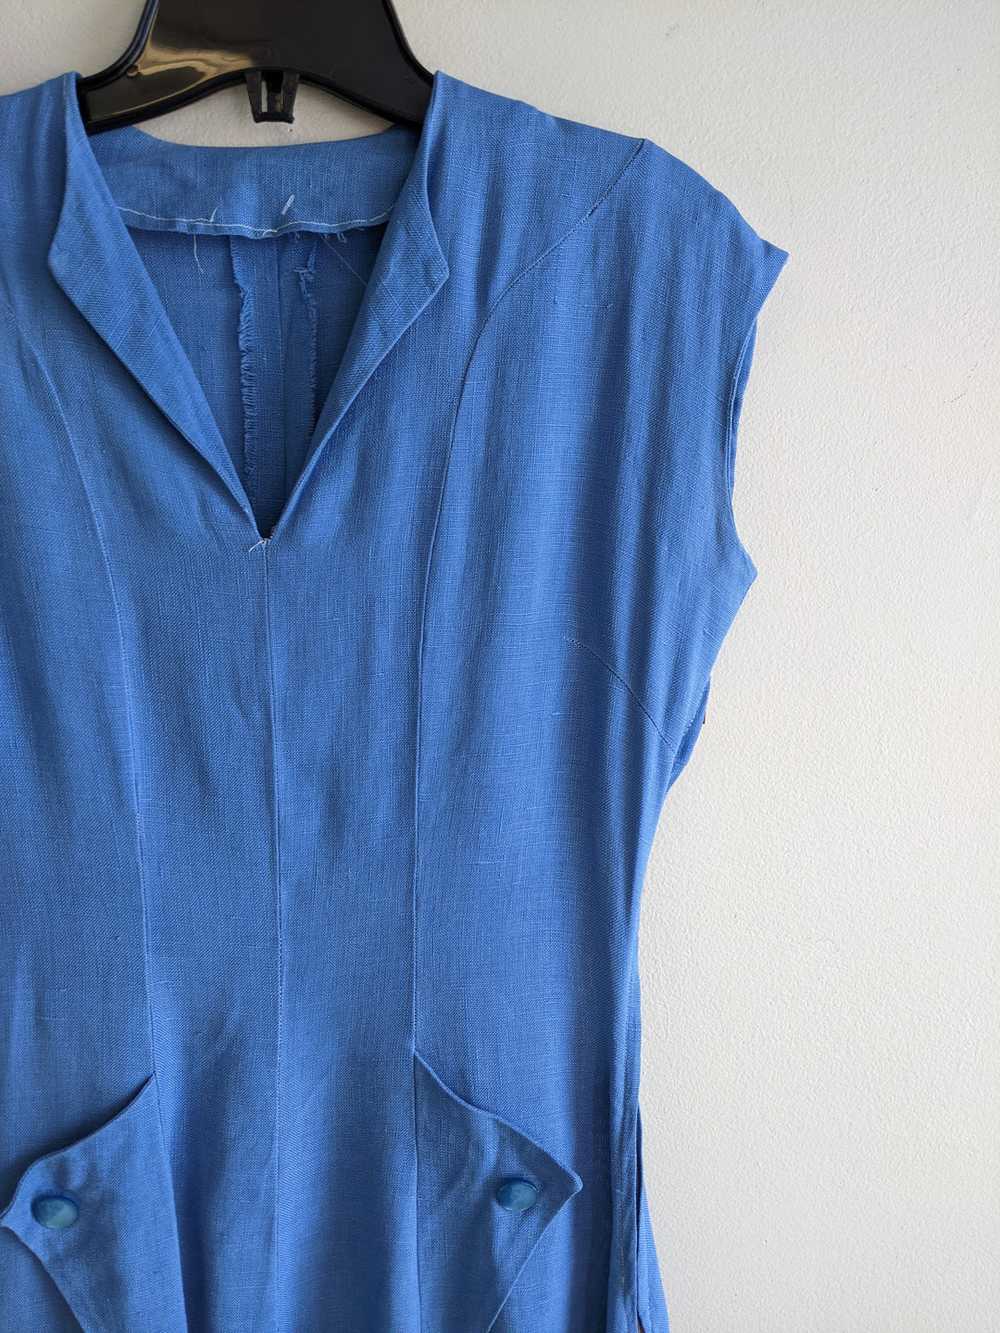 1950s Cornflower Blue Dress - XS - image 2